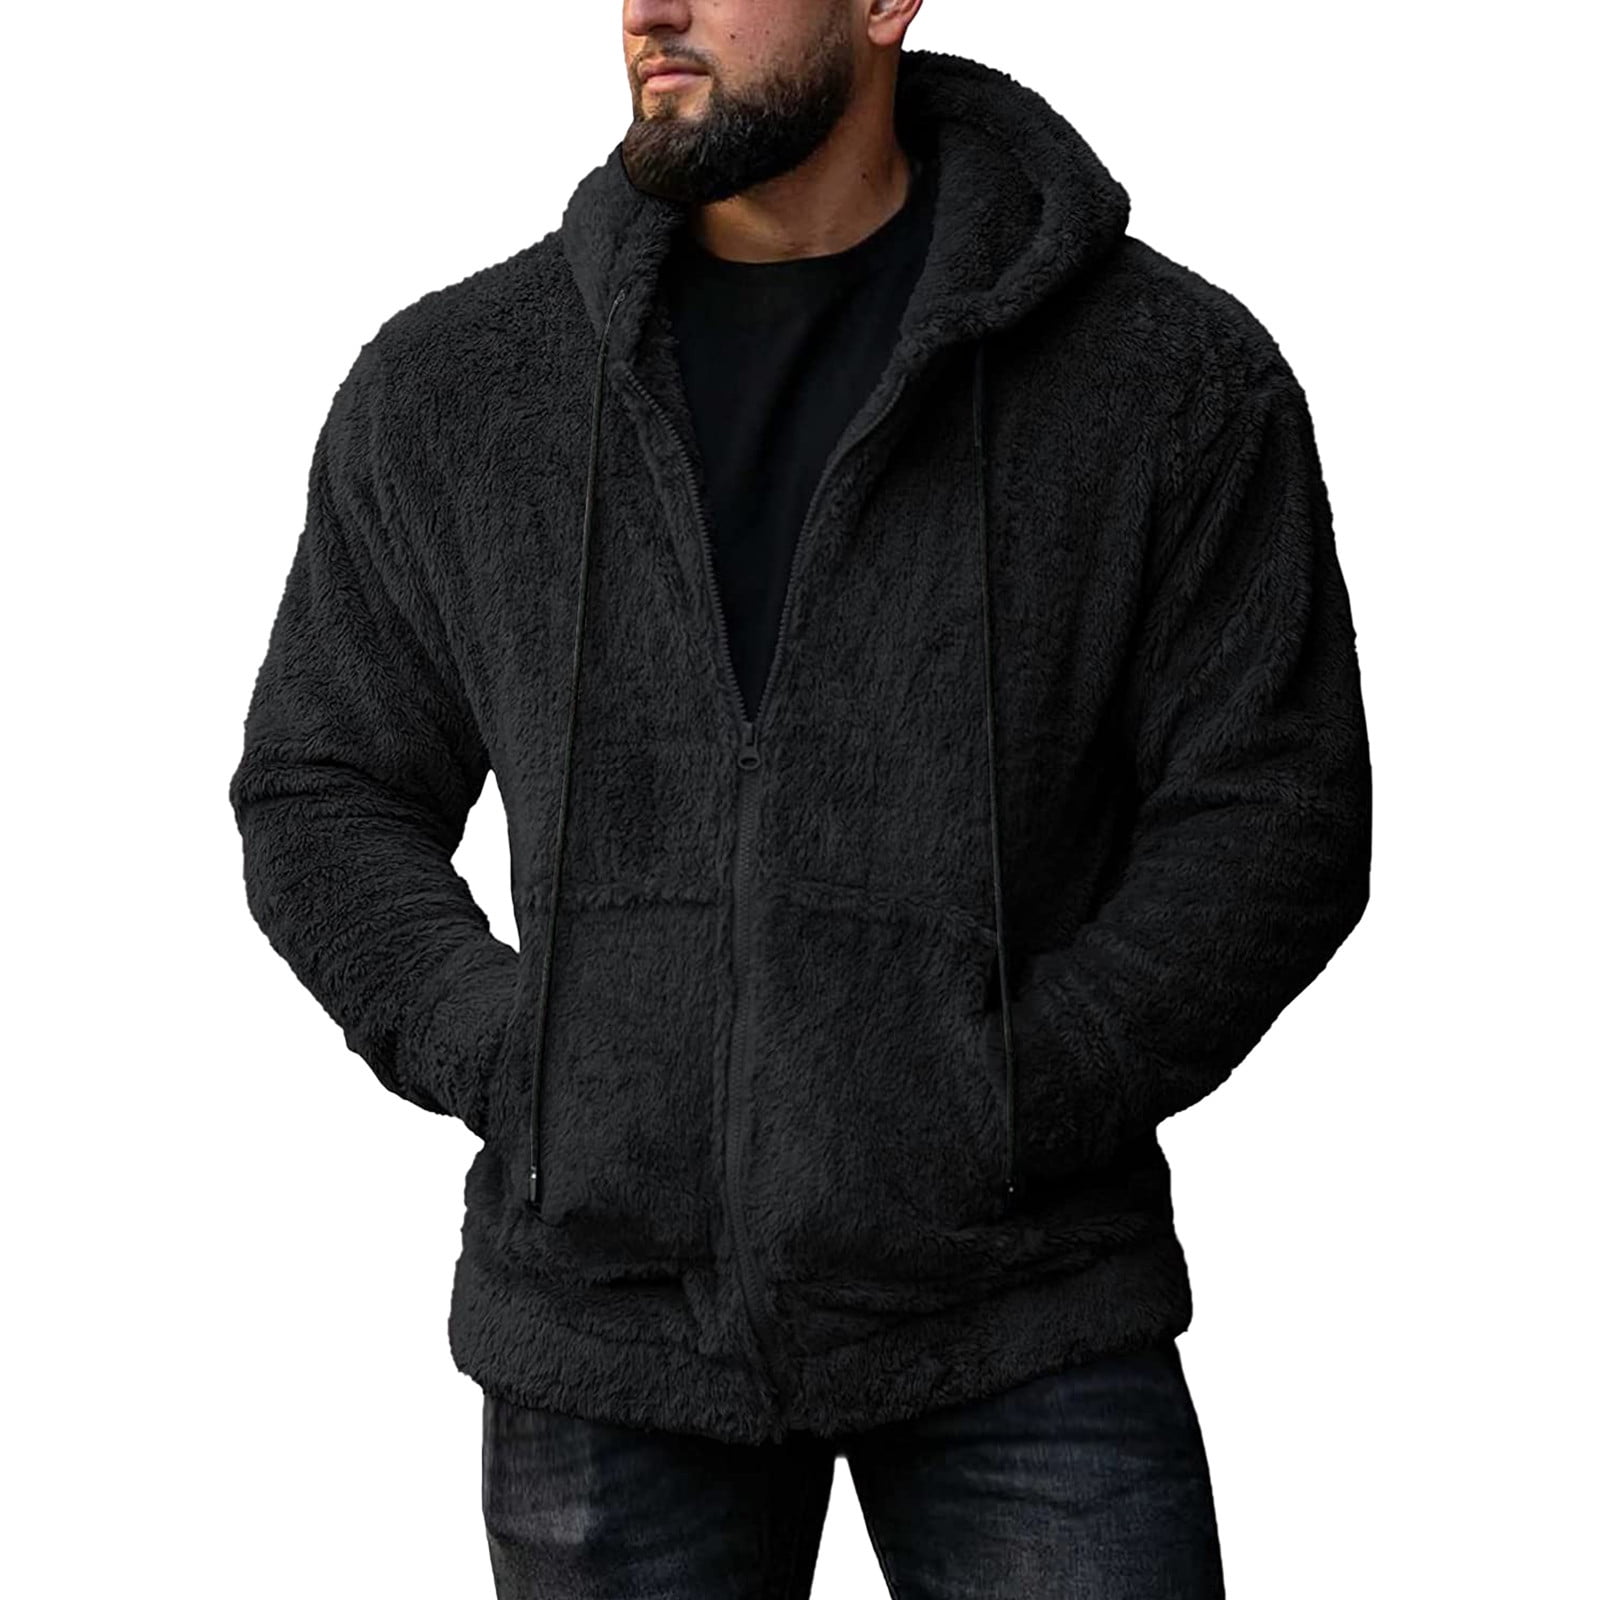 Black Men Pullover Hoodie Zip Sweatshirt Hooded Winter Warm Outwear Pocket  Coat